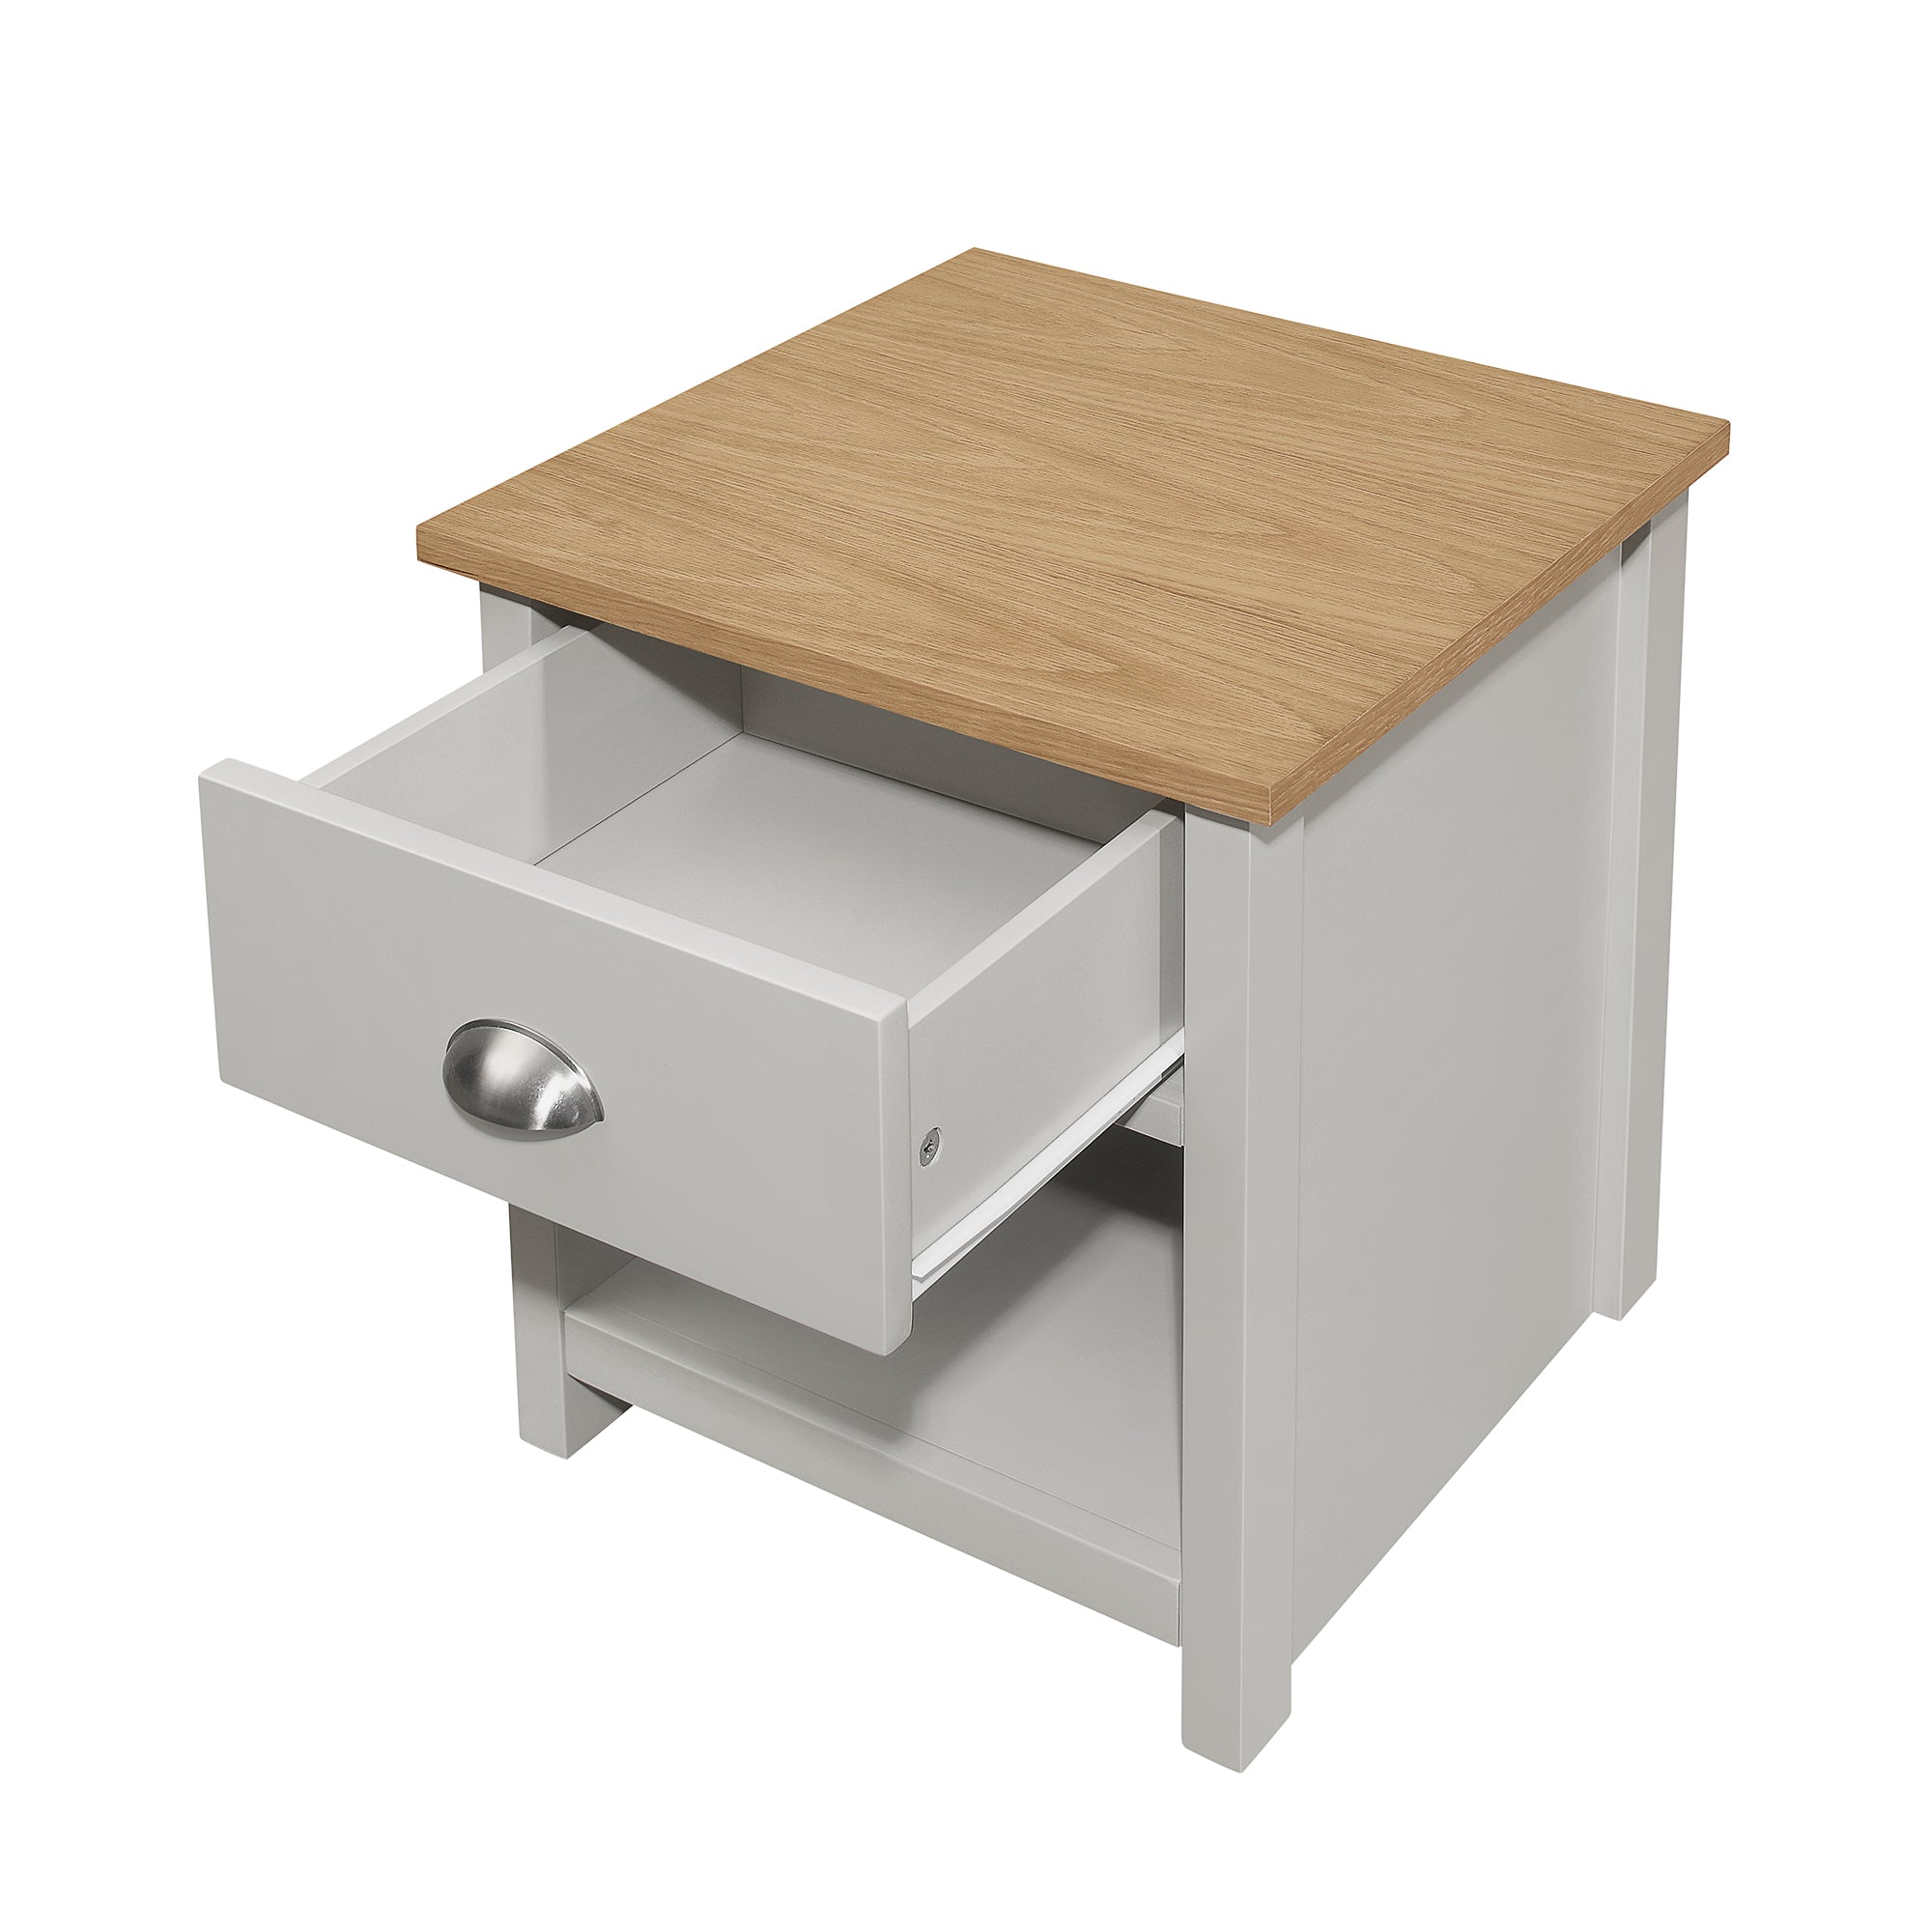 1-Drawer Solid wood and MDF and Oak Veneer Nightstand in Grey